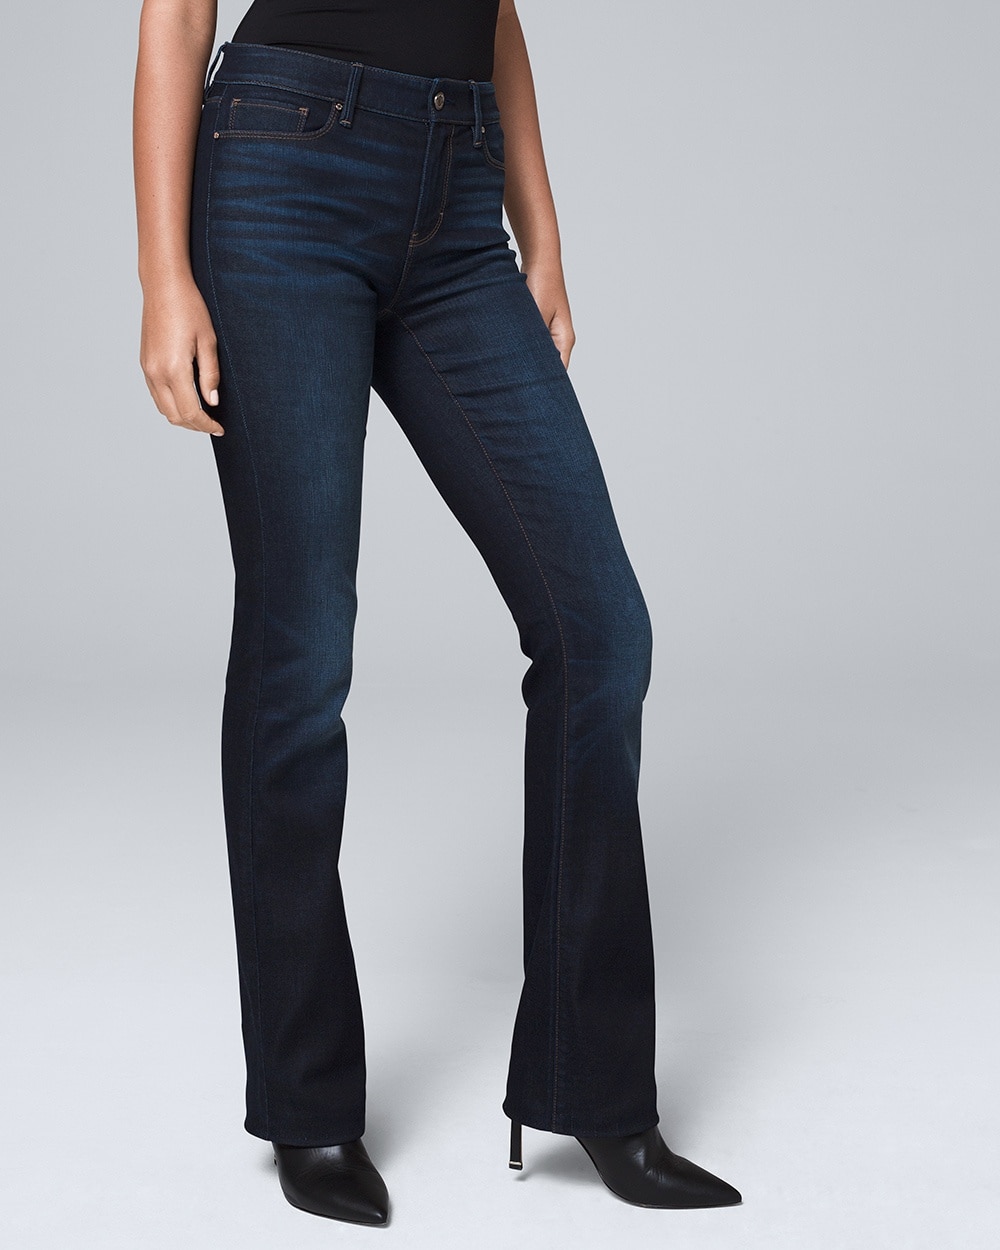 Mid-Rise Everyday Soft Denim\u2122 Bootcut Jeans - White House Black Market